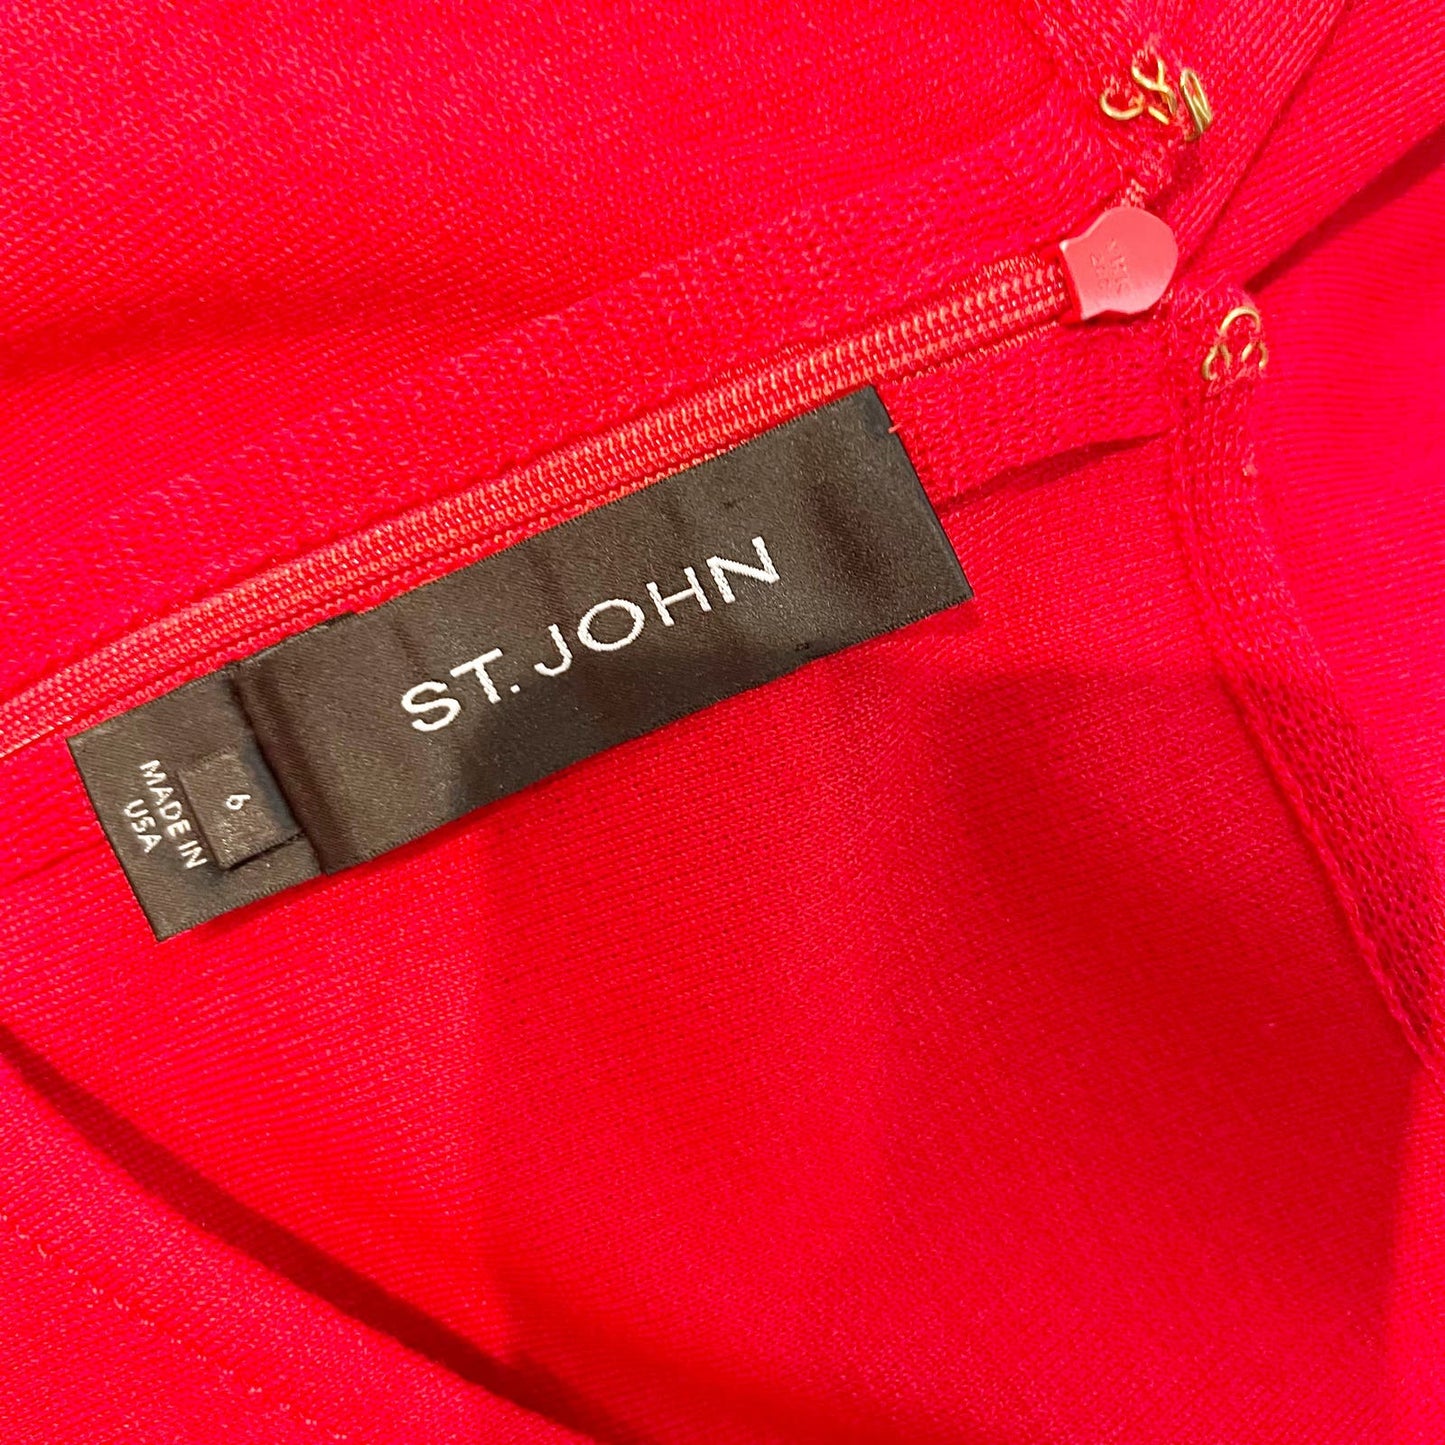 St. John Scoopneck Cap Sleeve Wool Blend Mini Dress Red 6